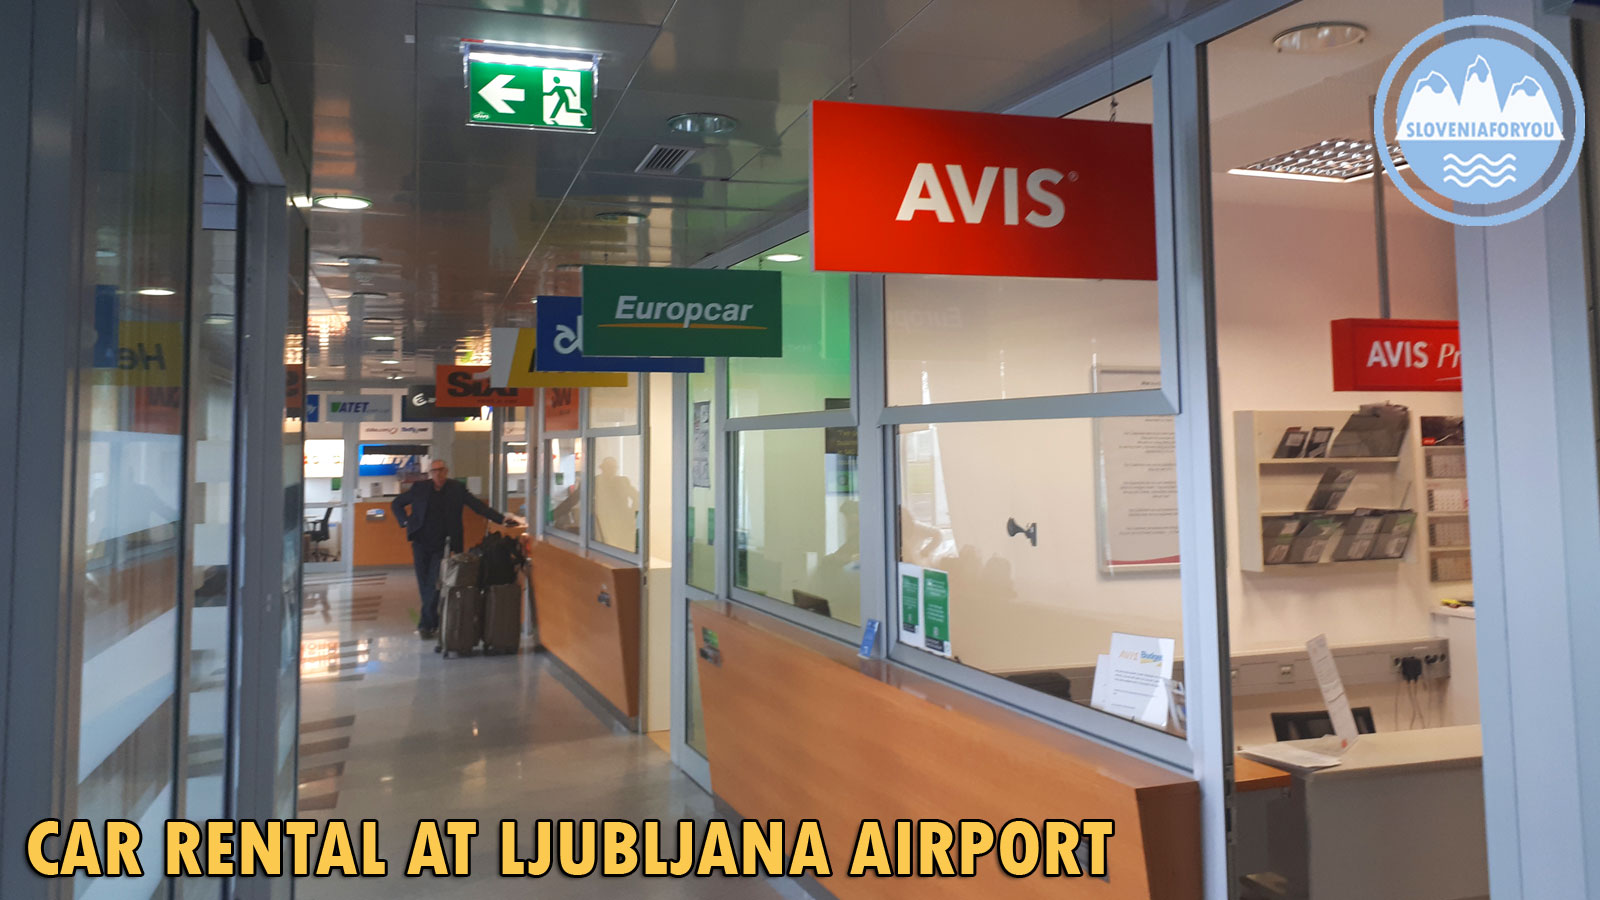 Car Rental at Ljubljana Airport- Sloveniaforyou